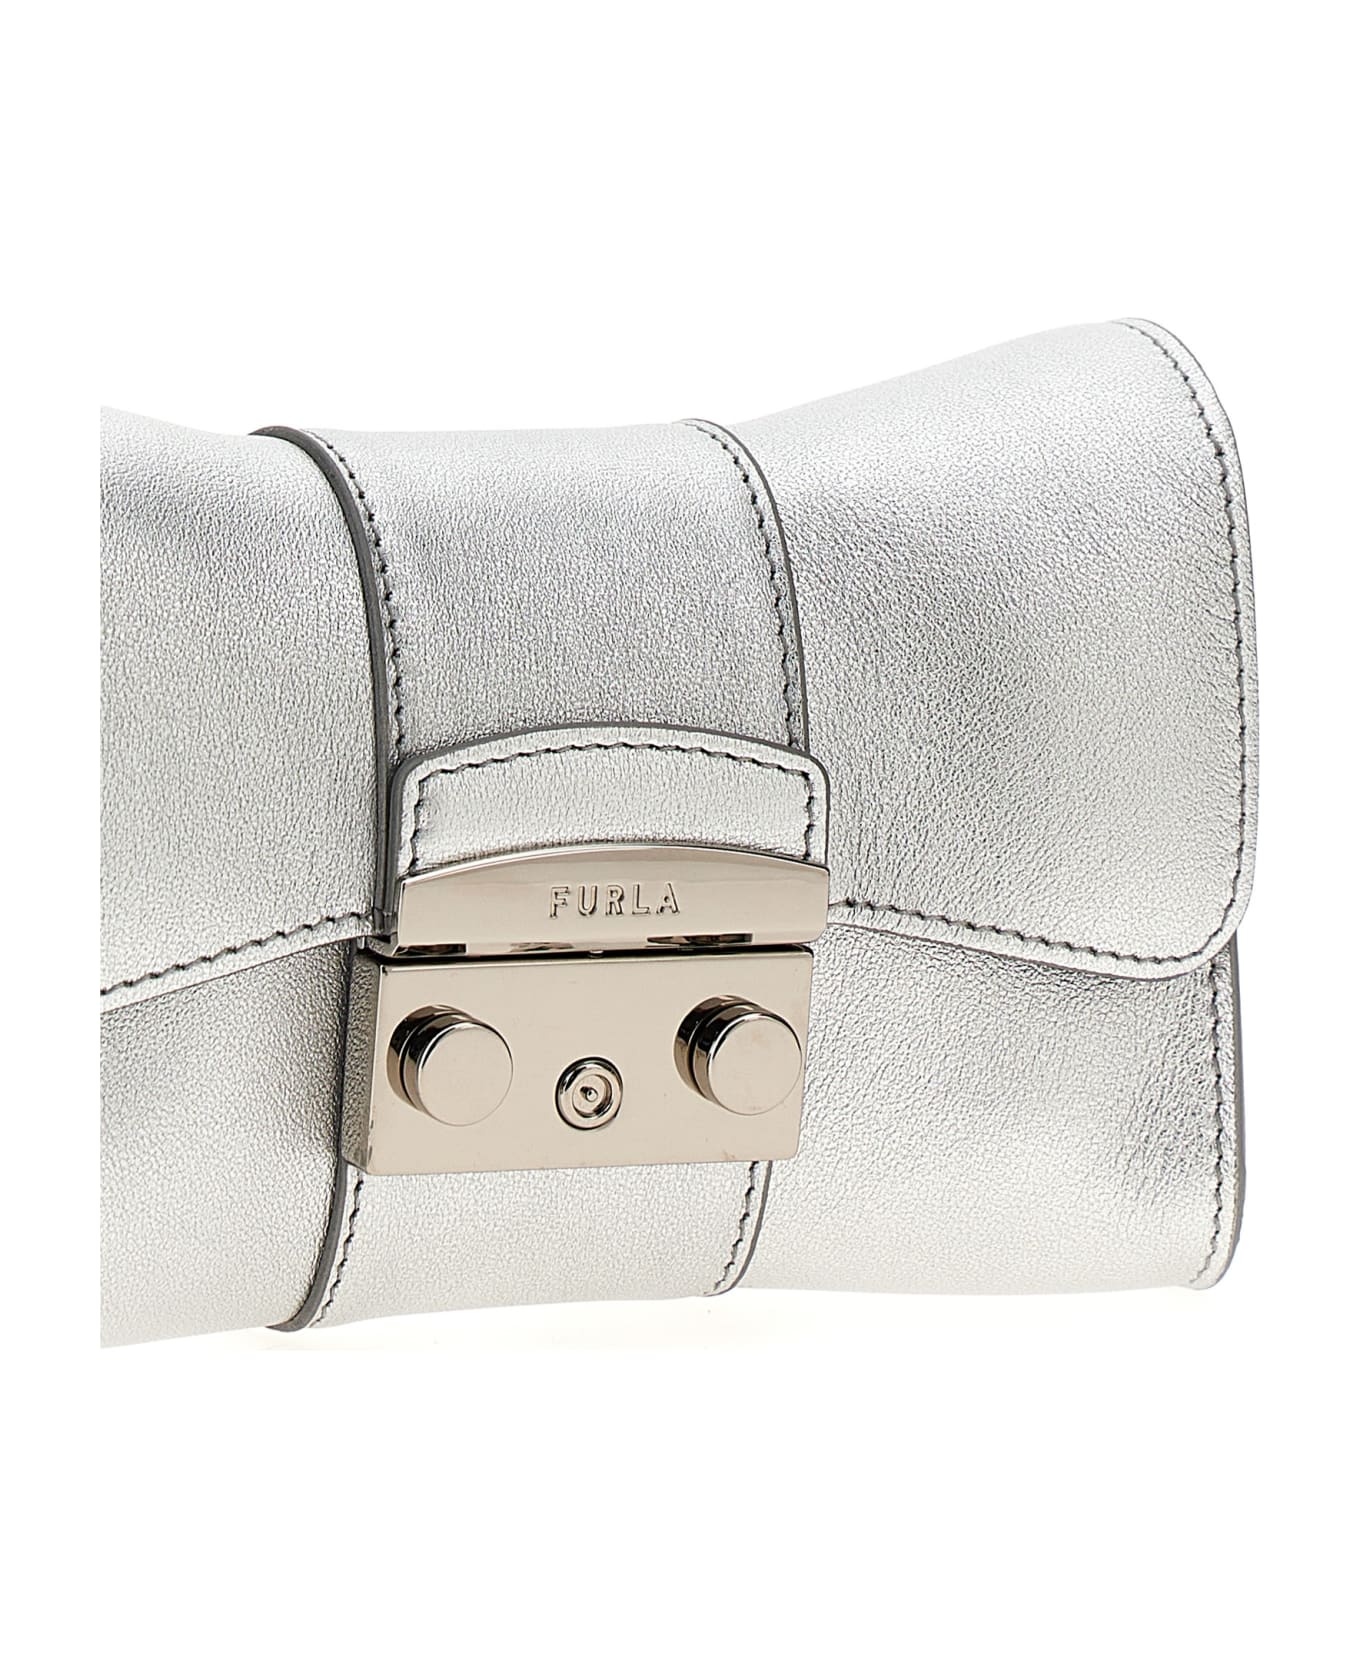 Furla 'metropolis Mini' Crossbody Bag - Color Silver